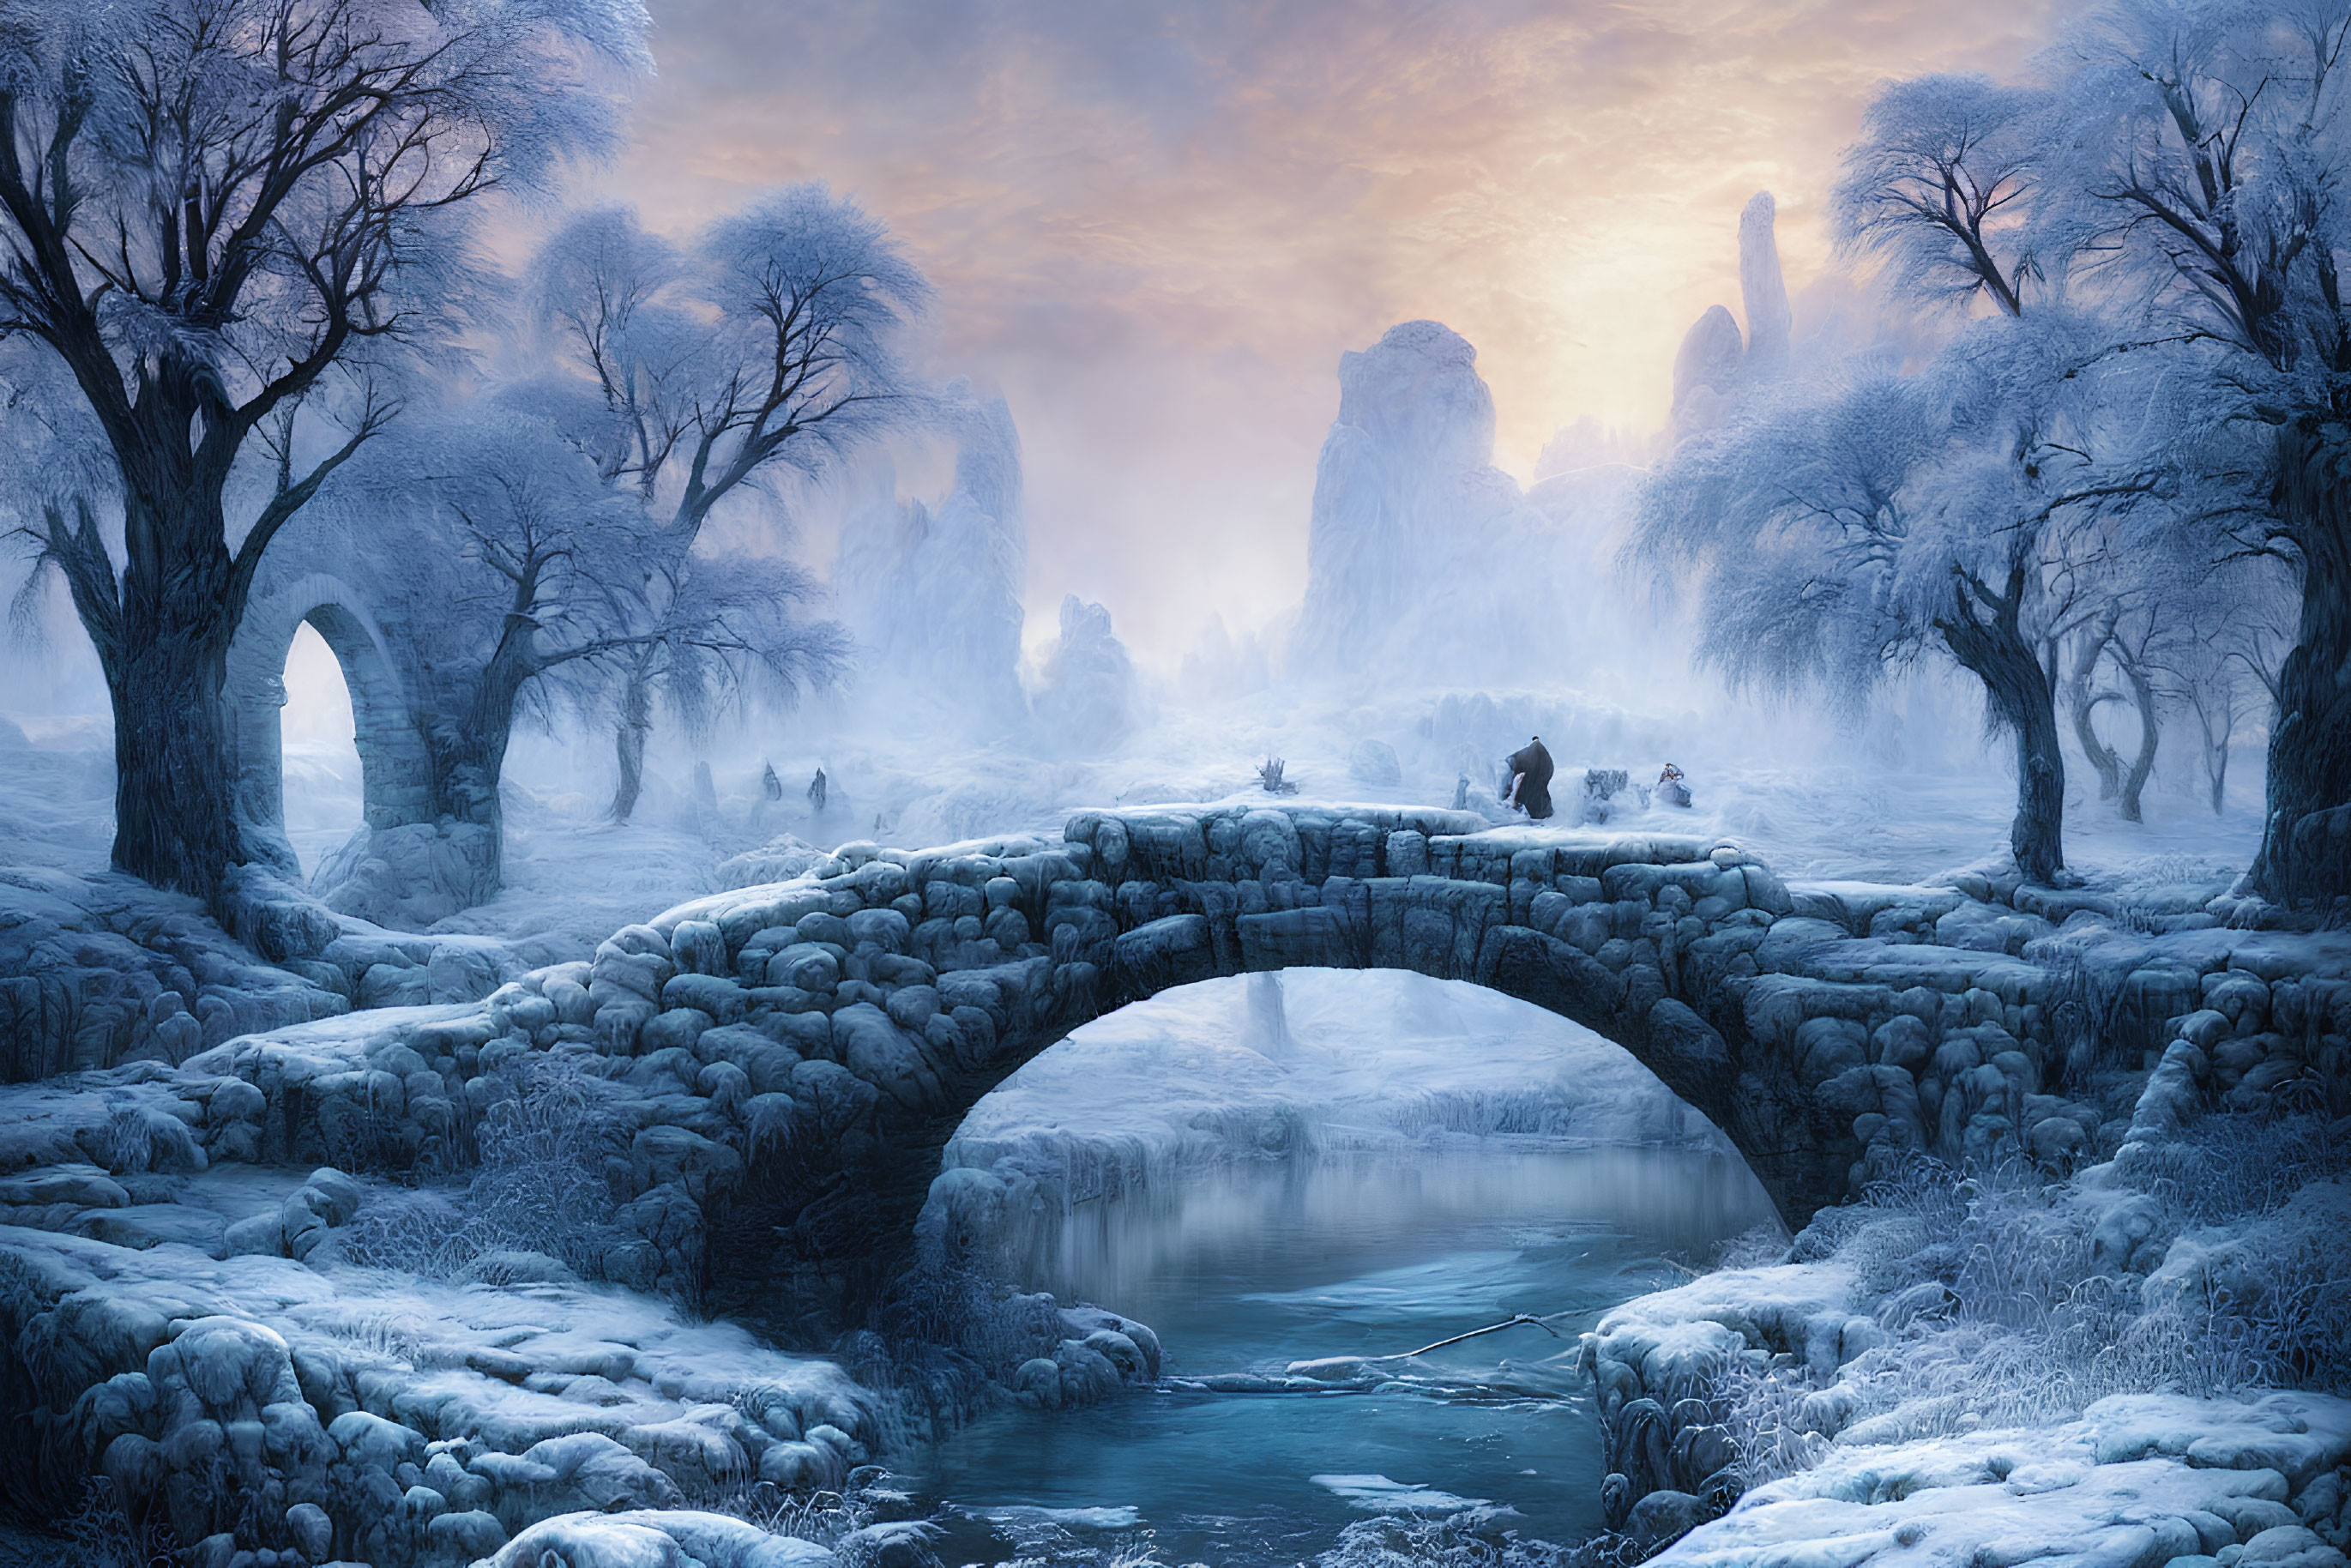 Ethereal winter scene: stone bridge, frozen river, bare trees, figures crossing at sunrise